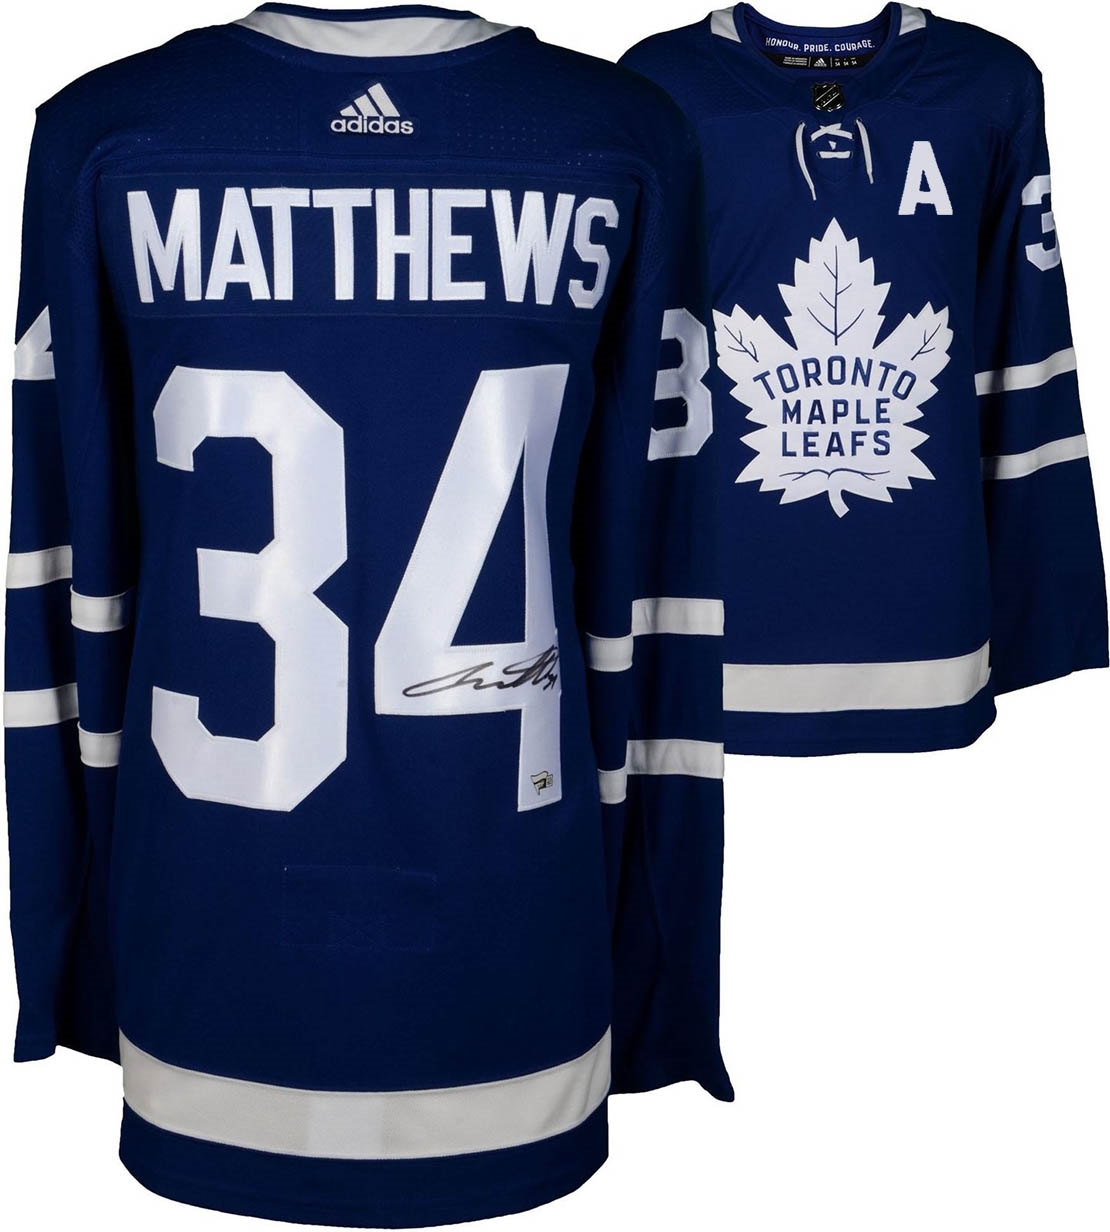 Auston Matthews Toronto Maple Leafs Autographed Adidas Jersey